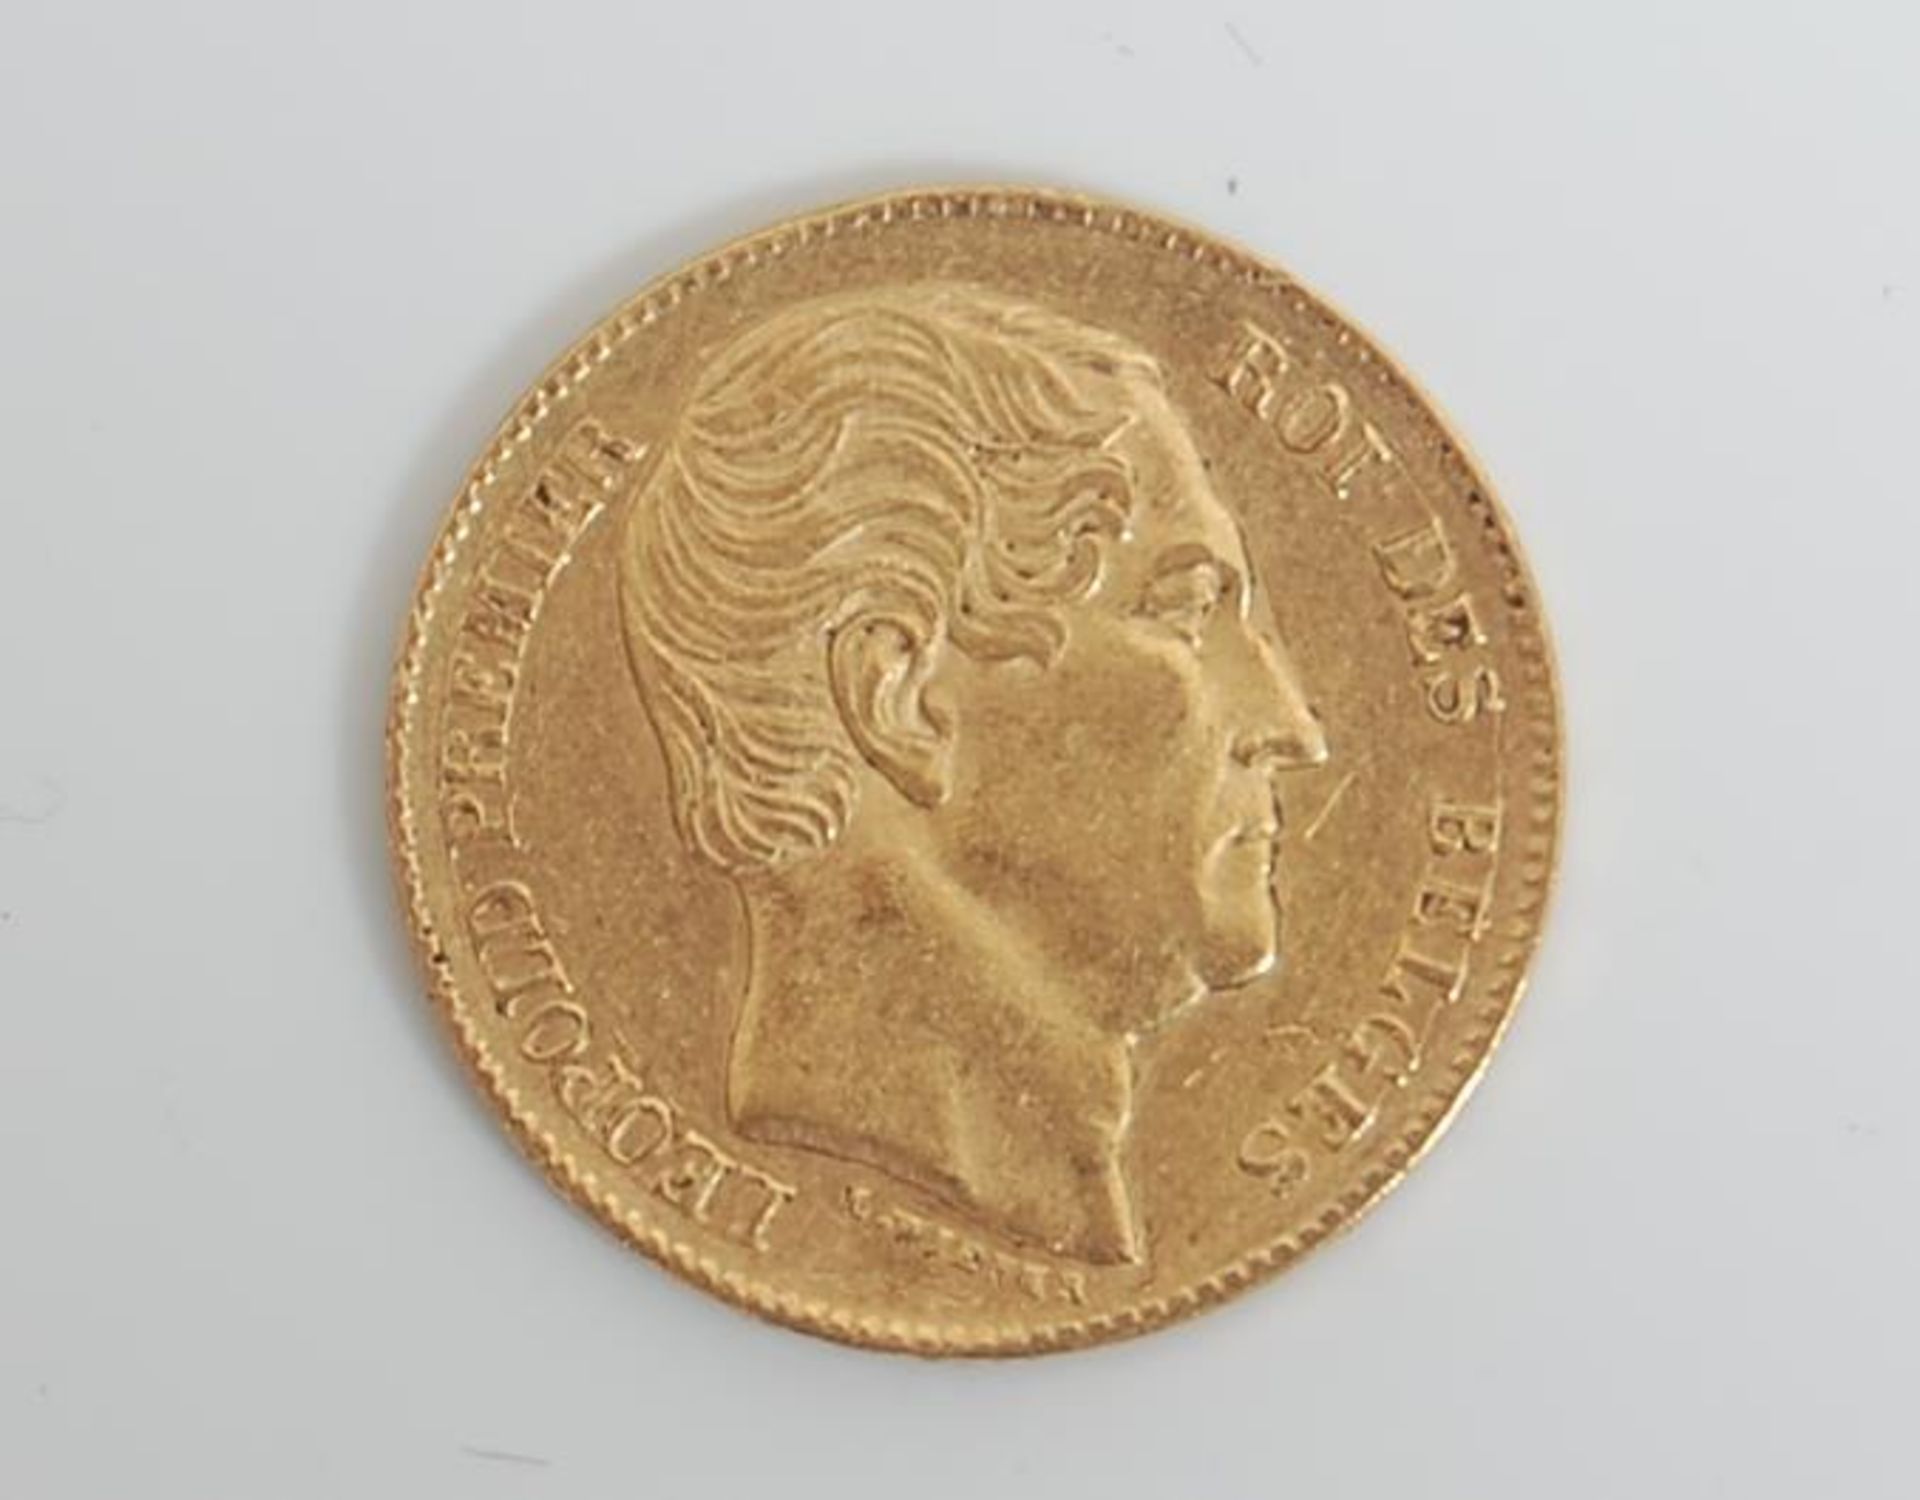 19TH CENTURY BELGIAN FRANC GOLD COIN